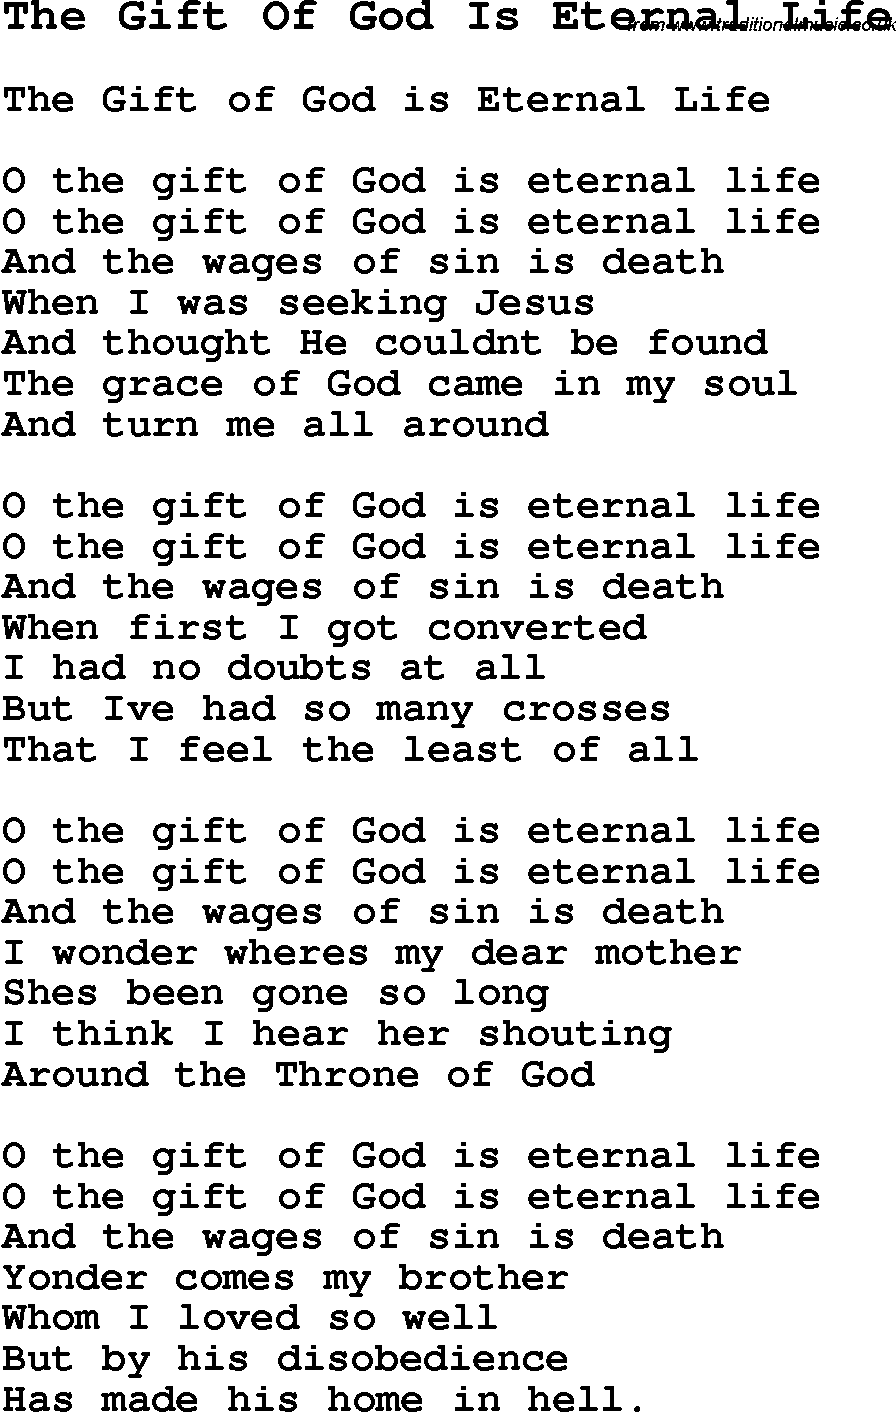 Negro Spiritual Song Lyrics for The Gift Of God Is Eternal Life